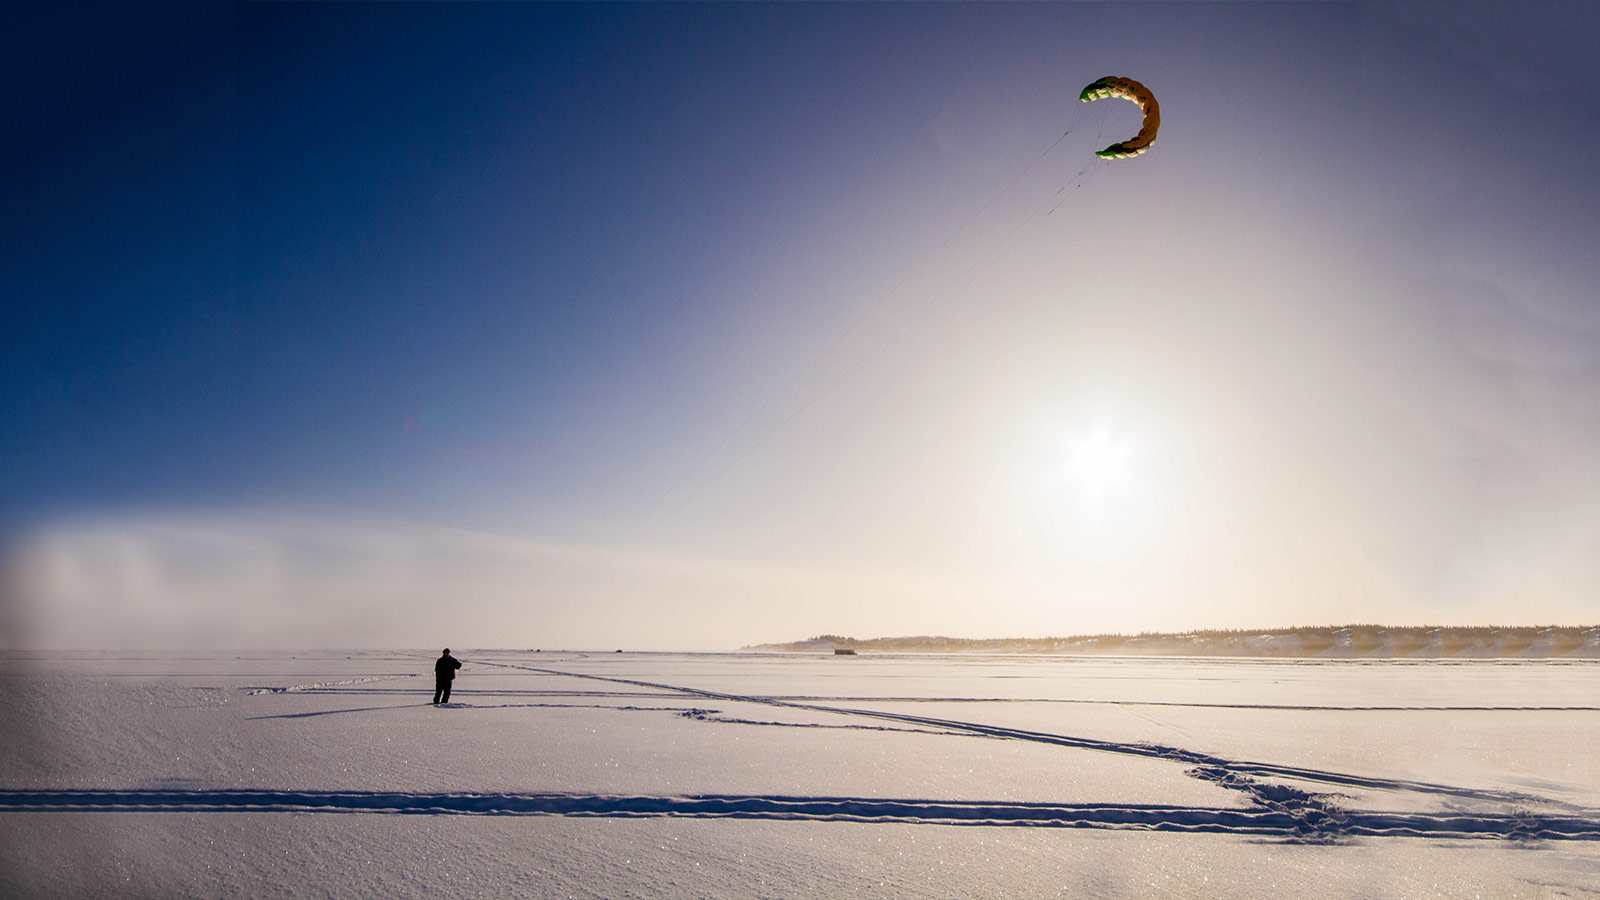 Man kite flying in winter on Great Slave Lake, Yellowknife.